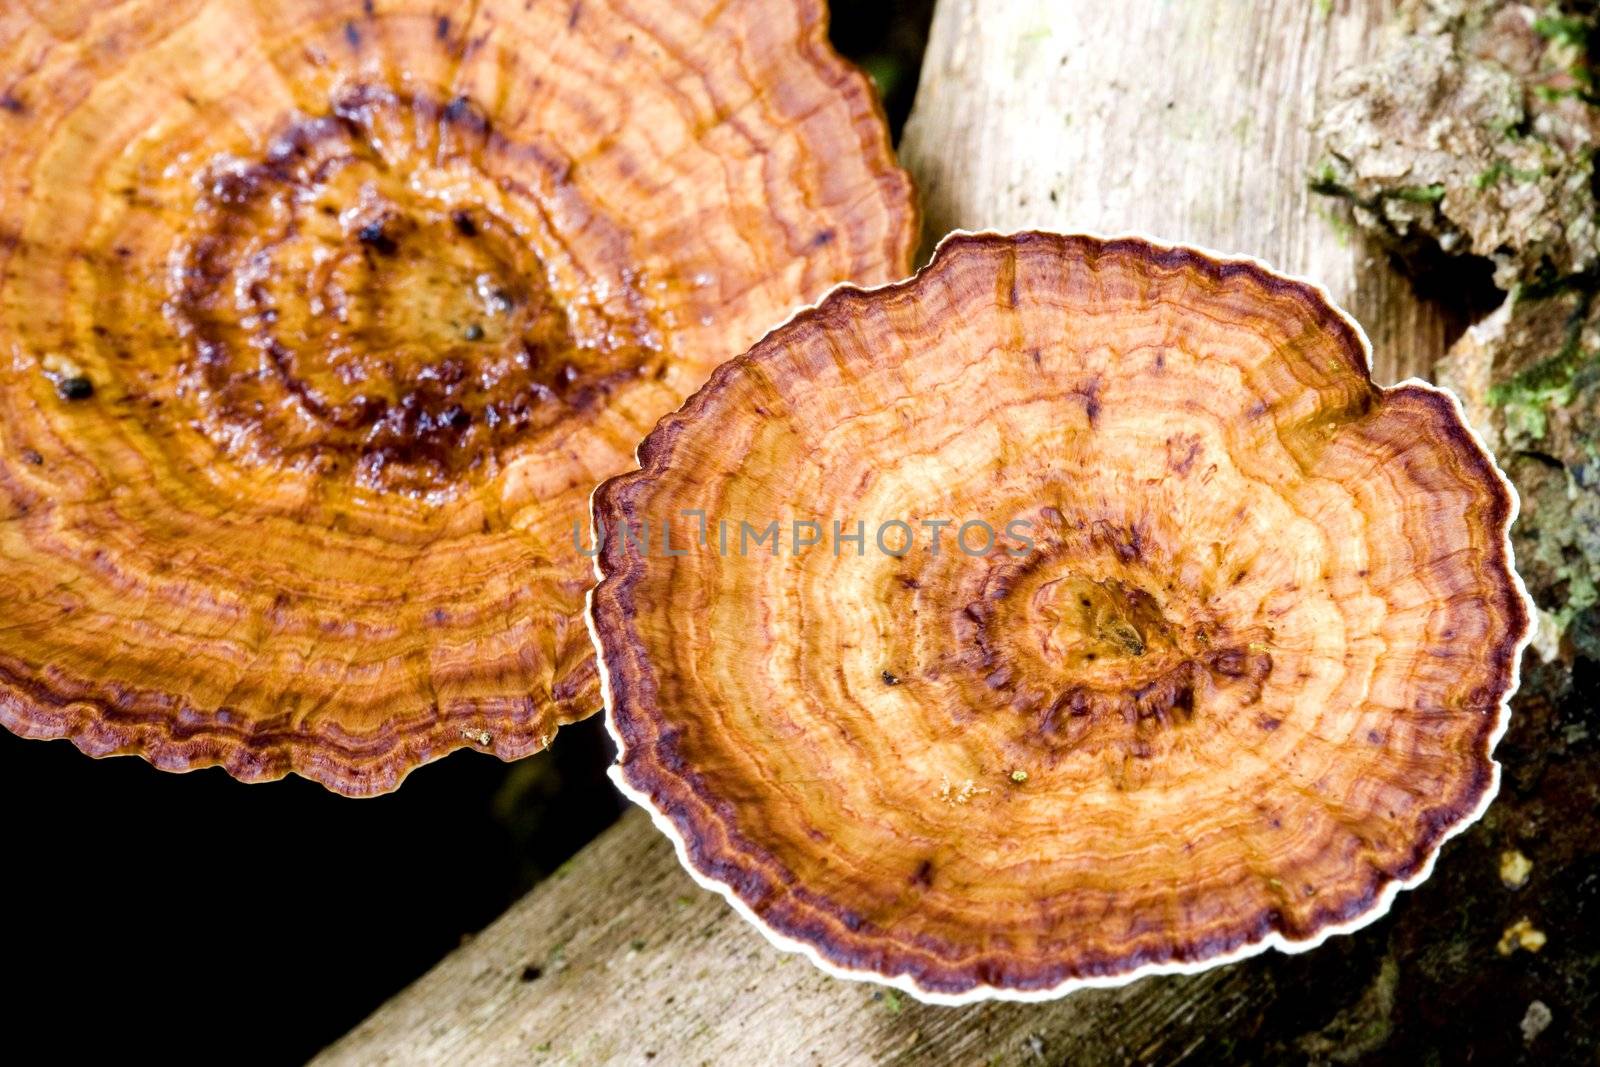 Image of tropical rainforest wild mushrooms.